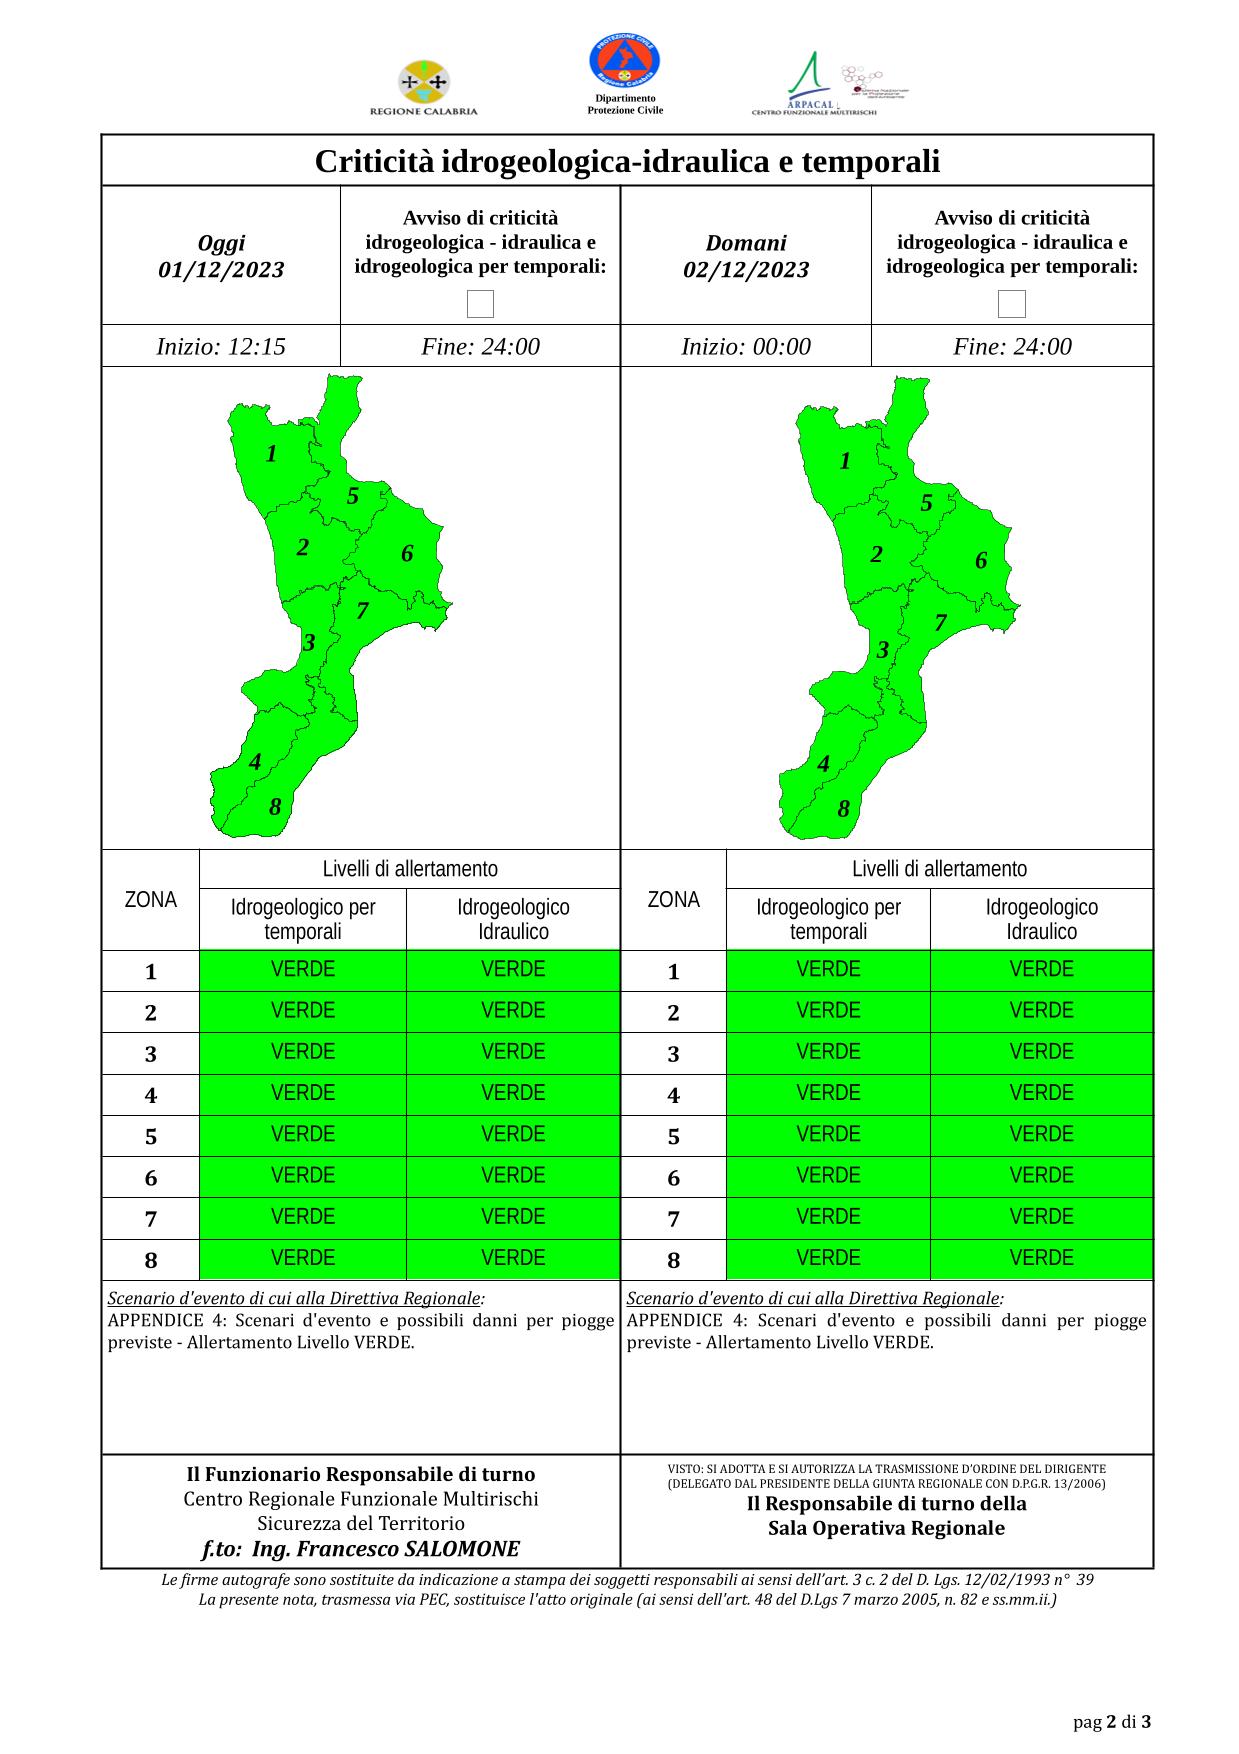 Criticità idrogeologica-idraulica e temporali in Calabria 01-12-2023